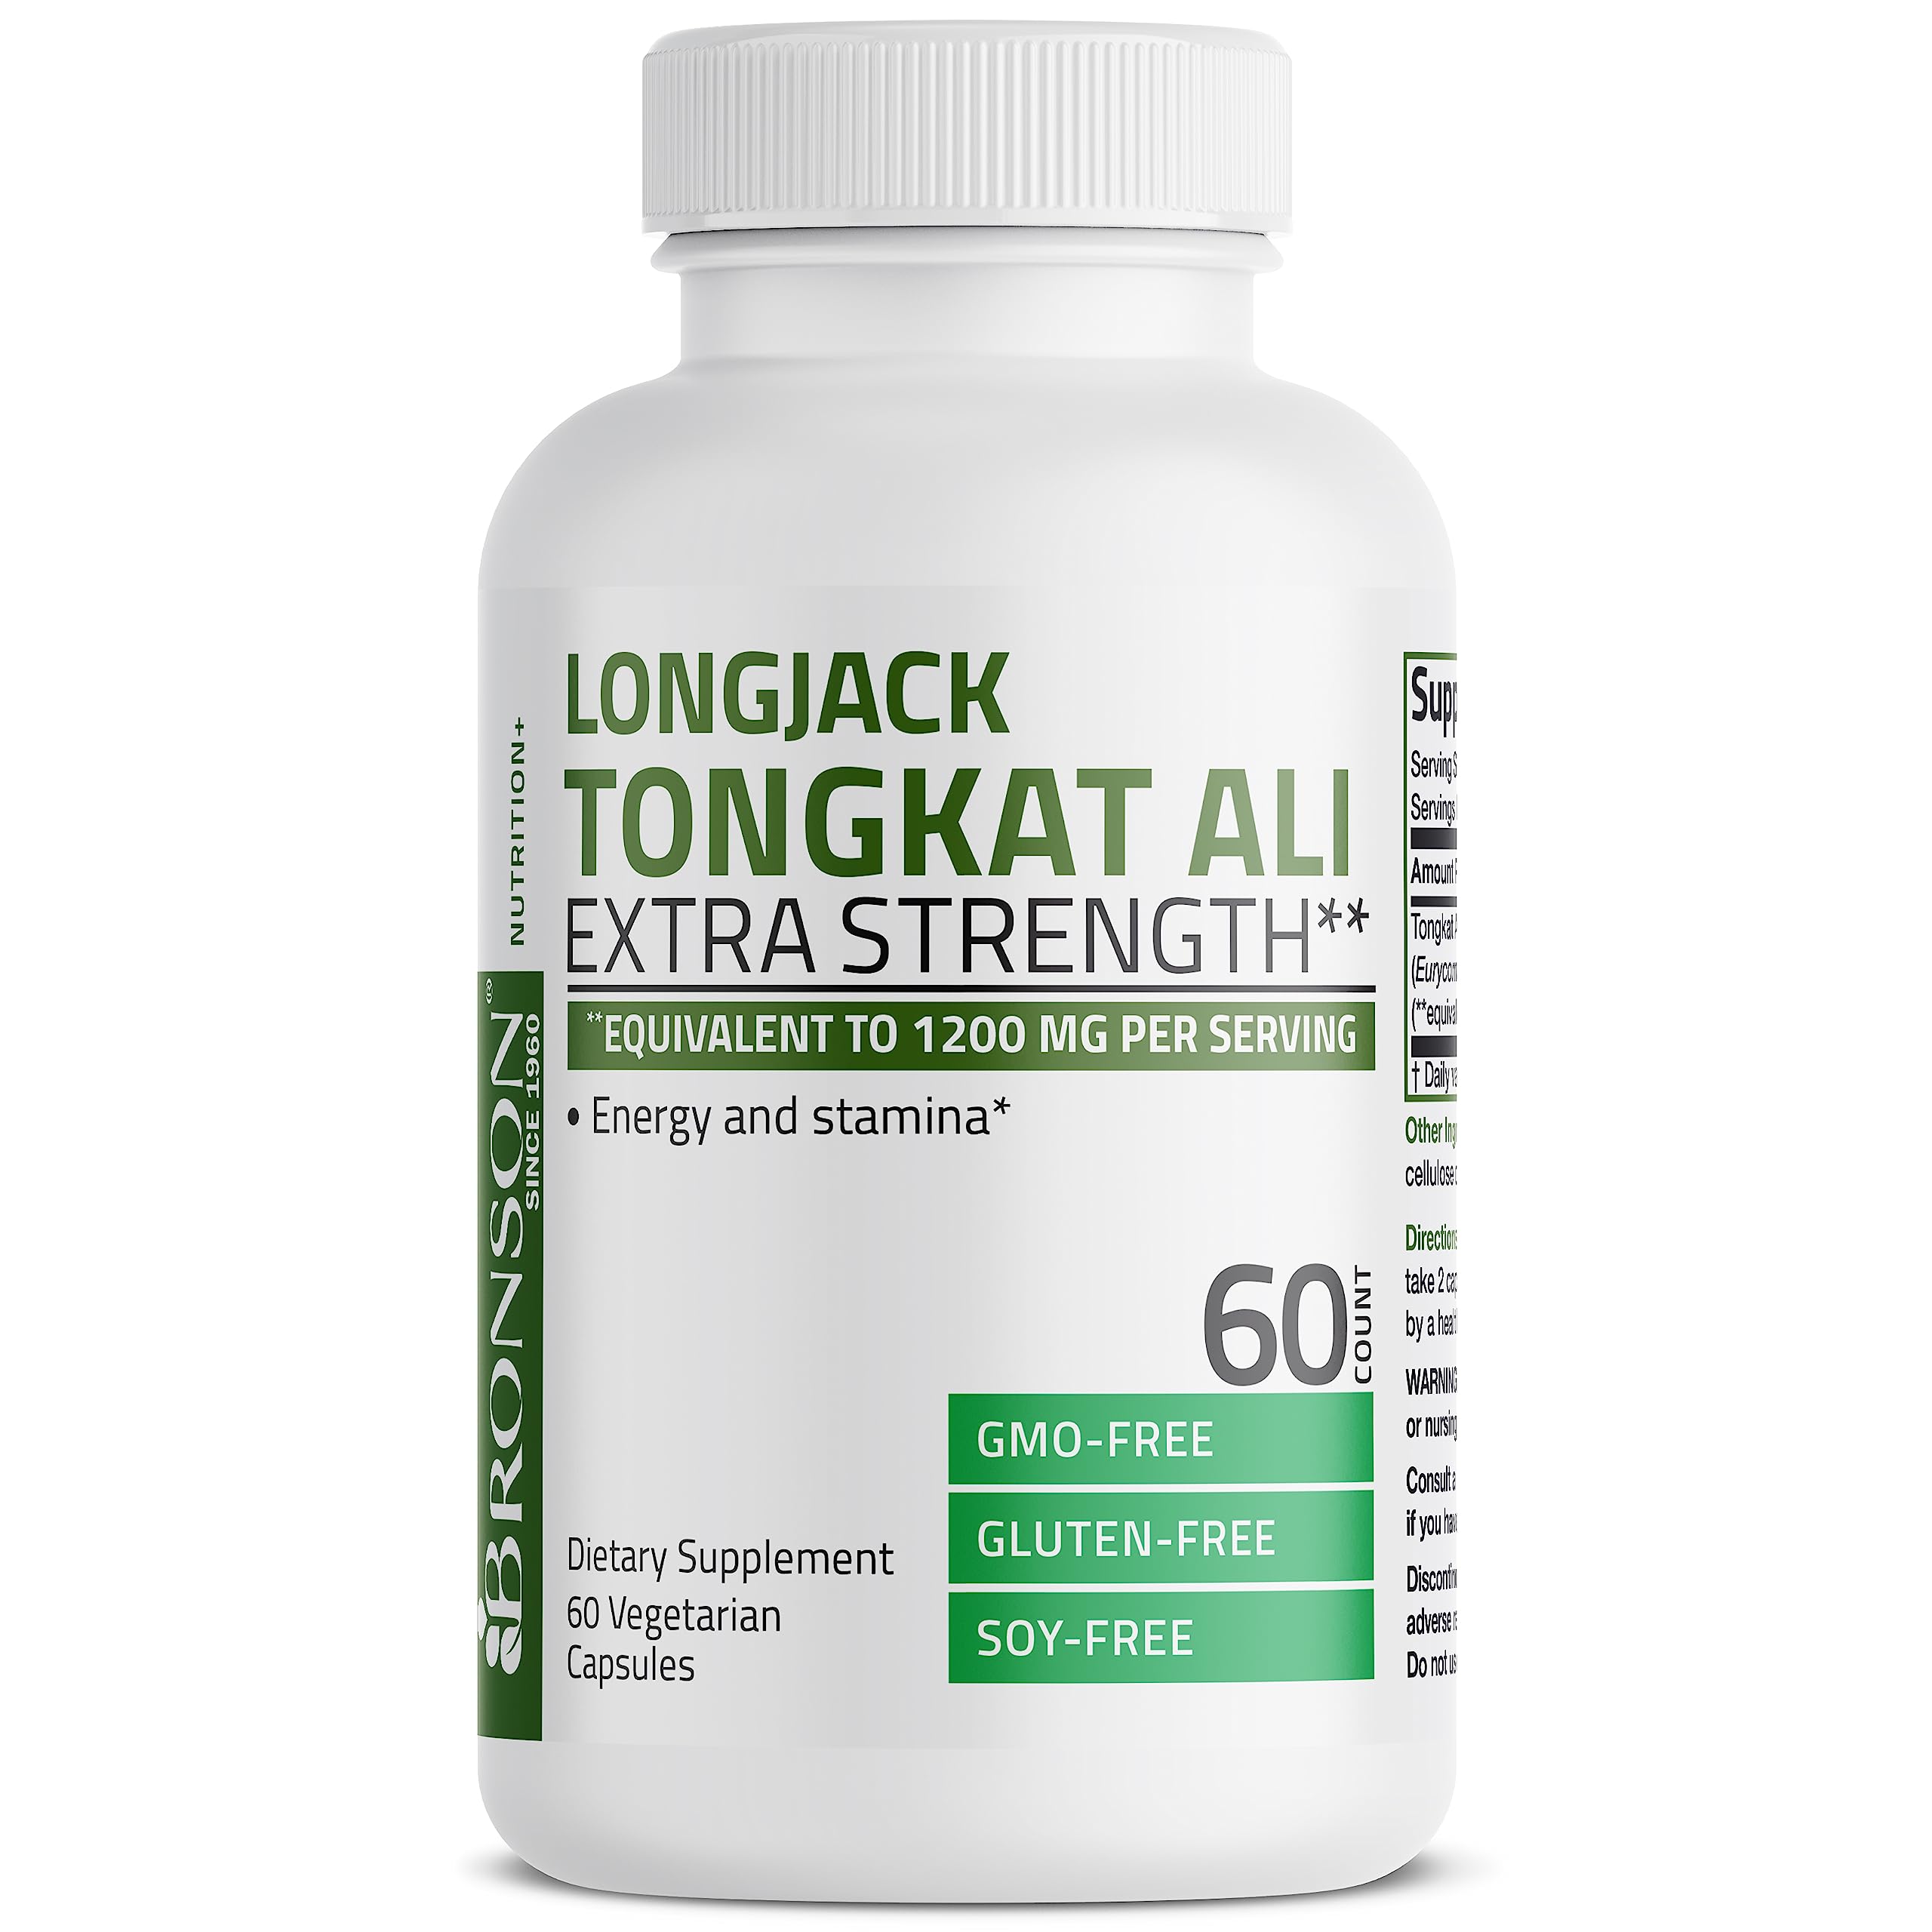 Bronson Longjack Tongkat Ali 1200mg Extra Strength 1200mg Per Serving, Supports Energy, Non-GMO, 60 Vegetarian Capsules